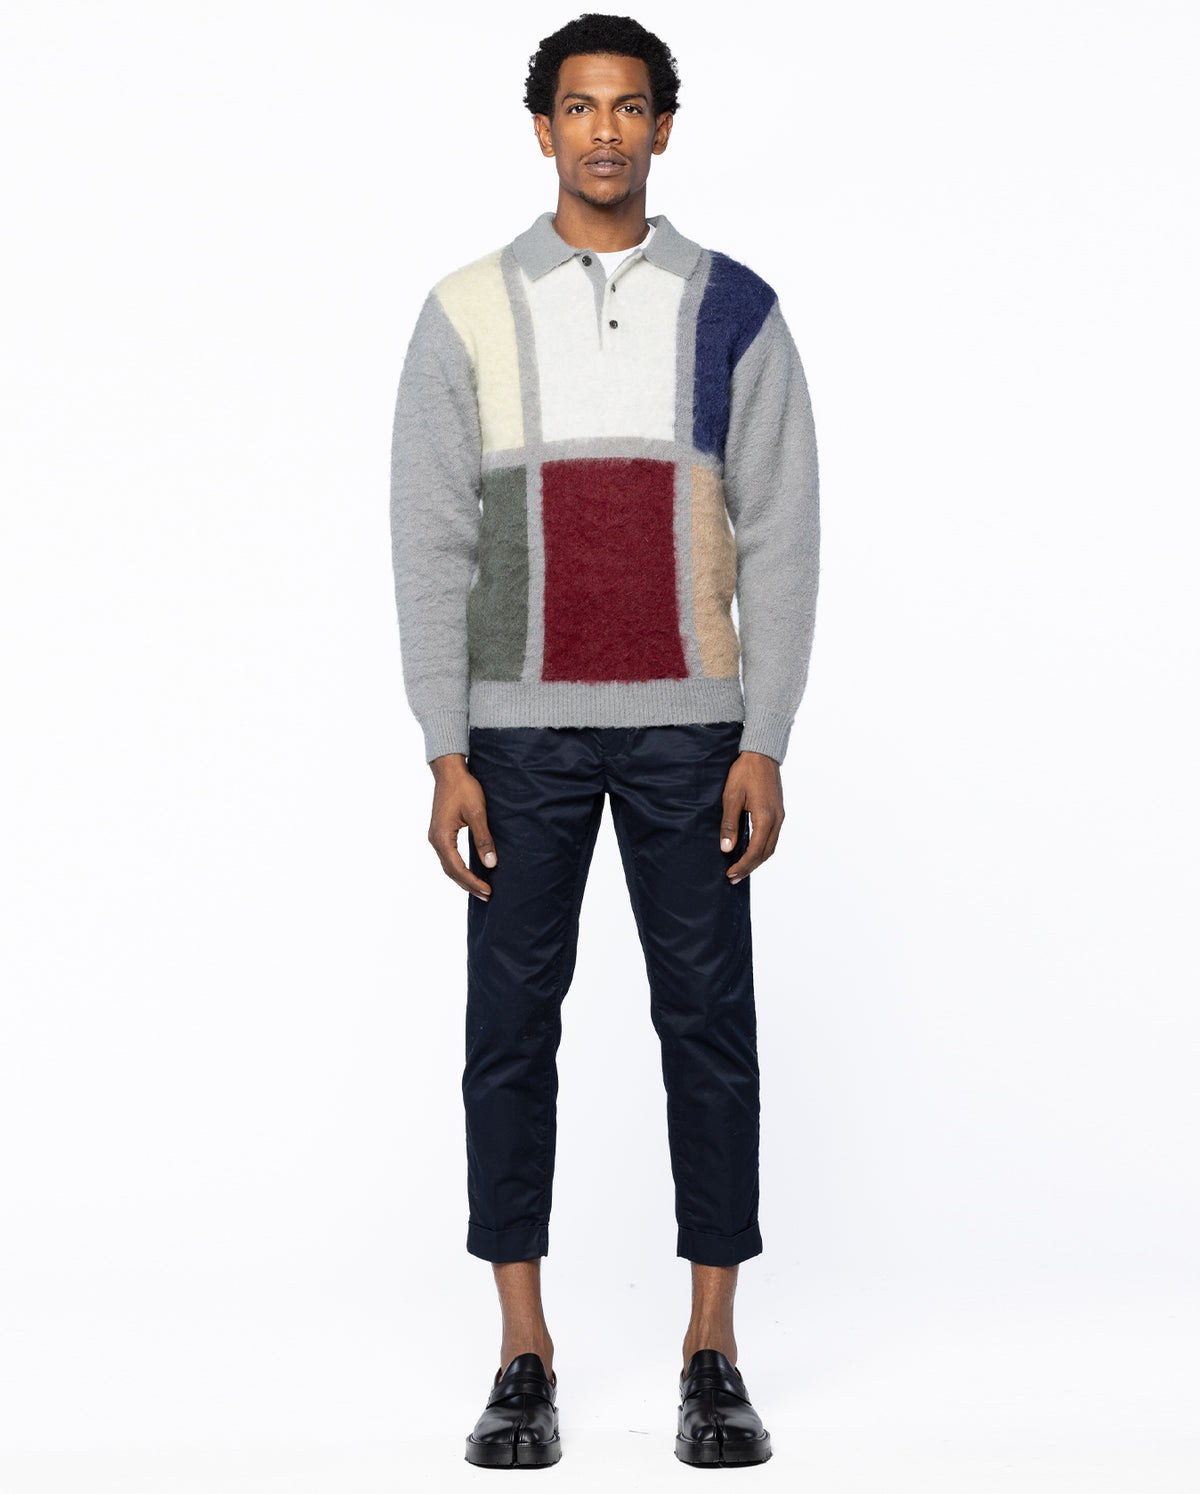 Knit Shaggy Polo Sweater - Grey